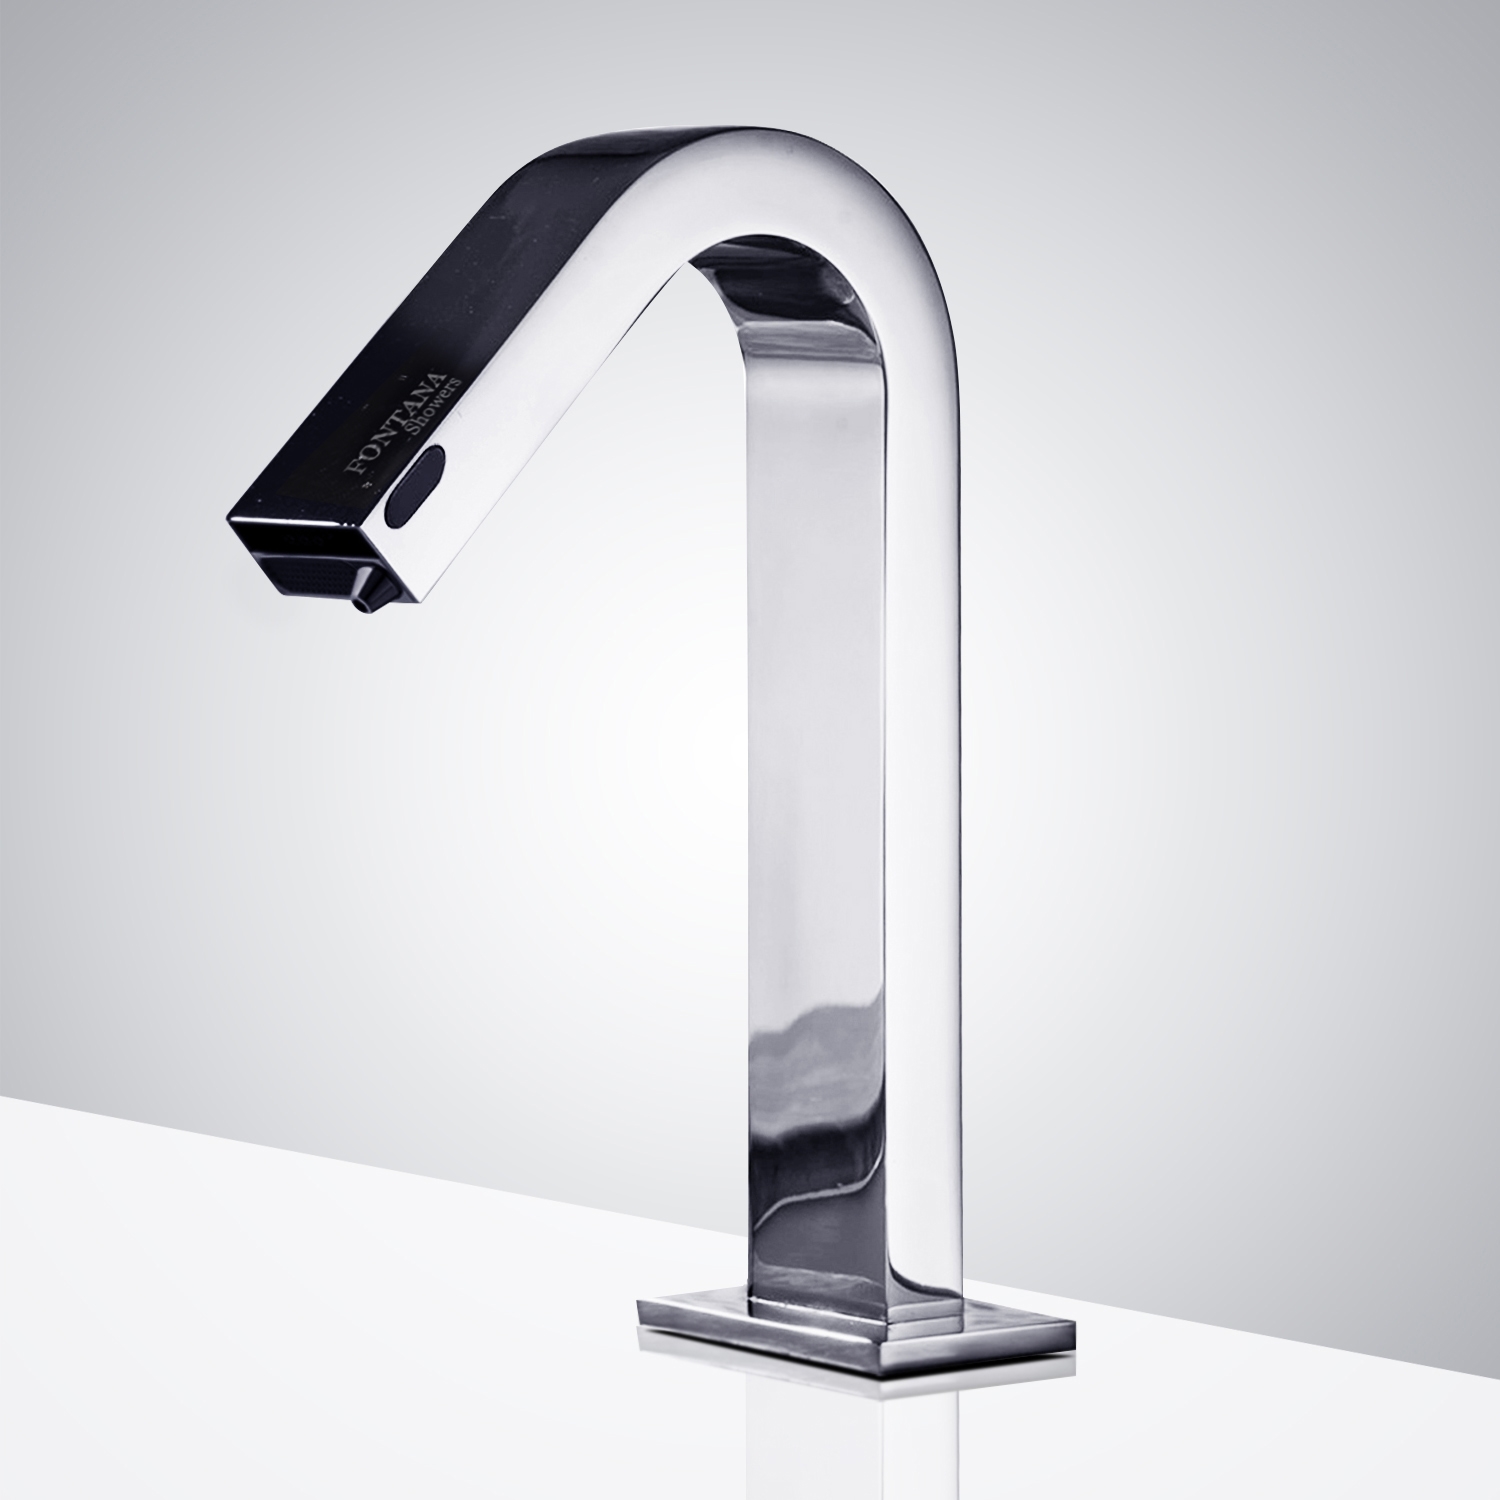 Fontana Dual Function Automatic Deck Mount Chrome Sensor Water Faucet and Soap Dispenser